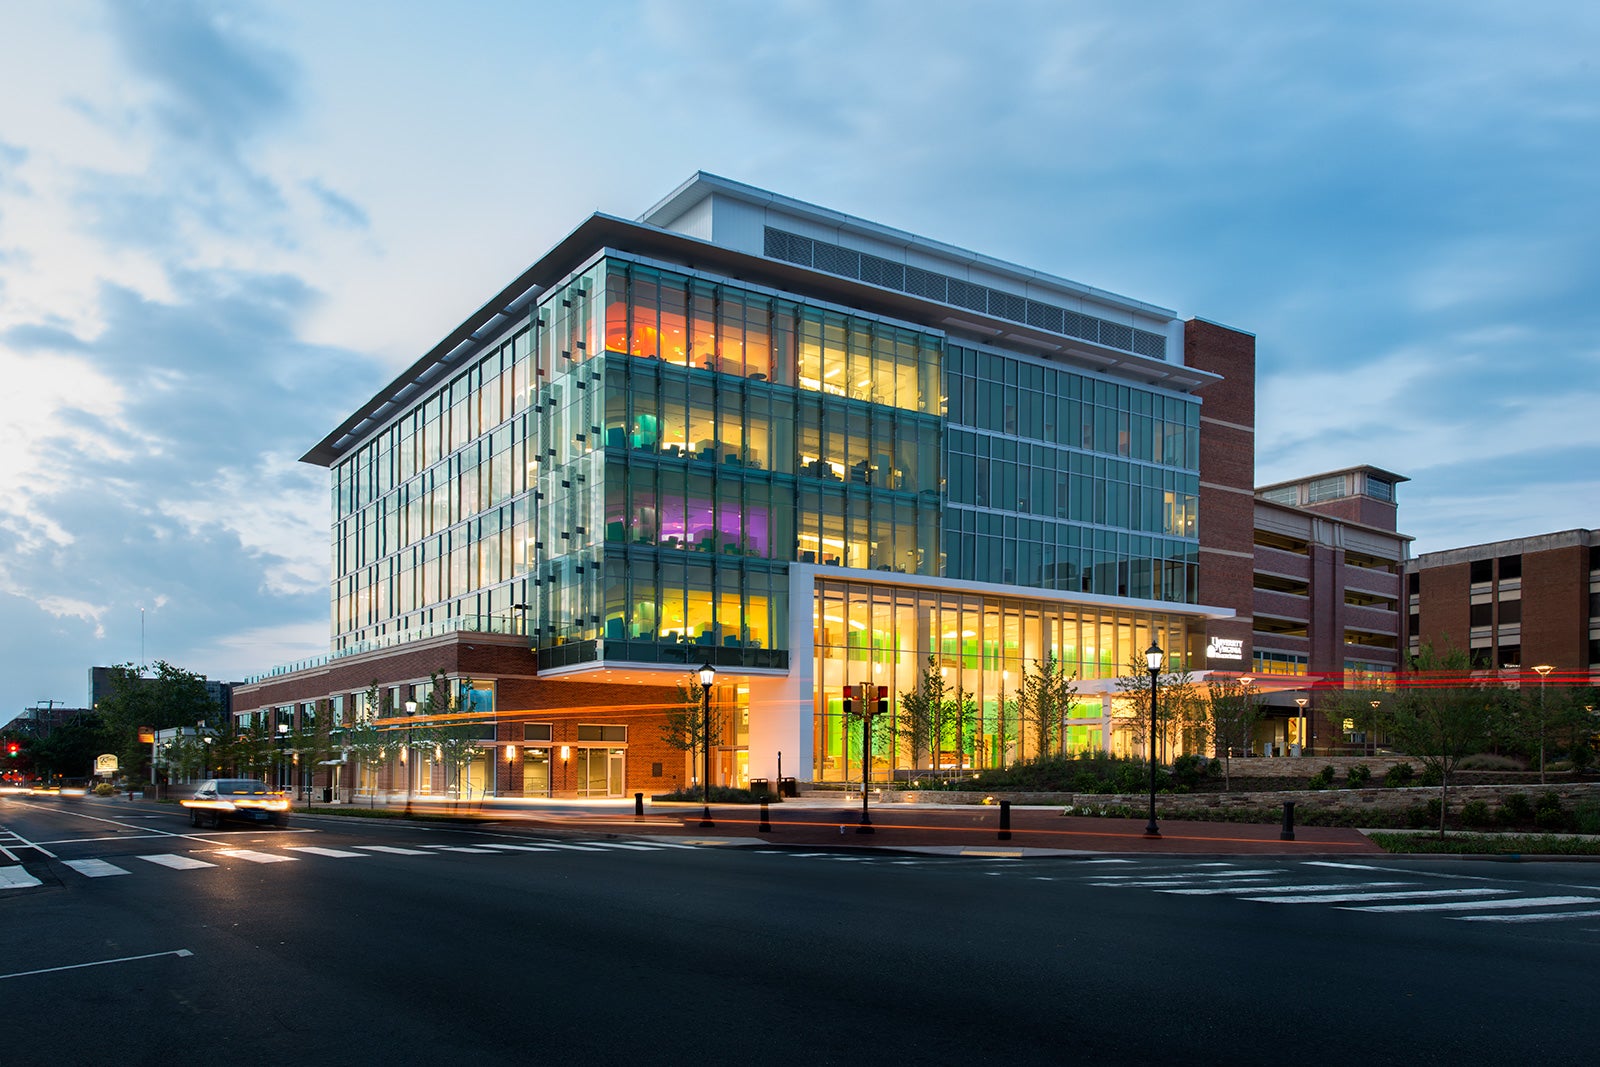 UVA radiology's Battle building